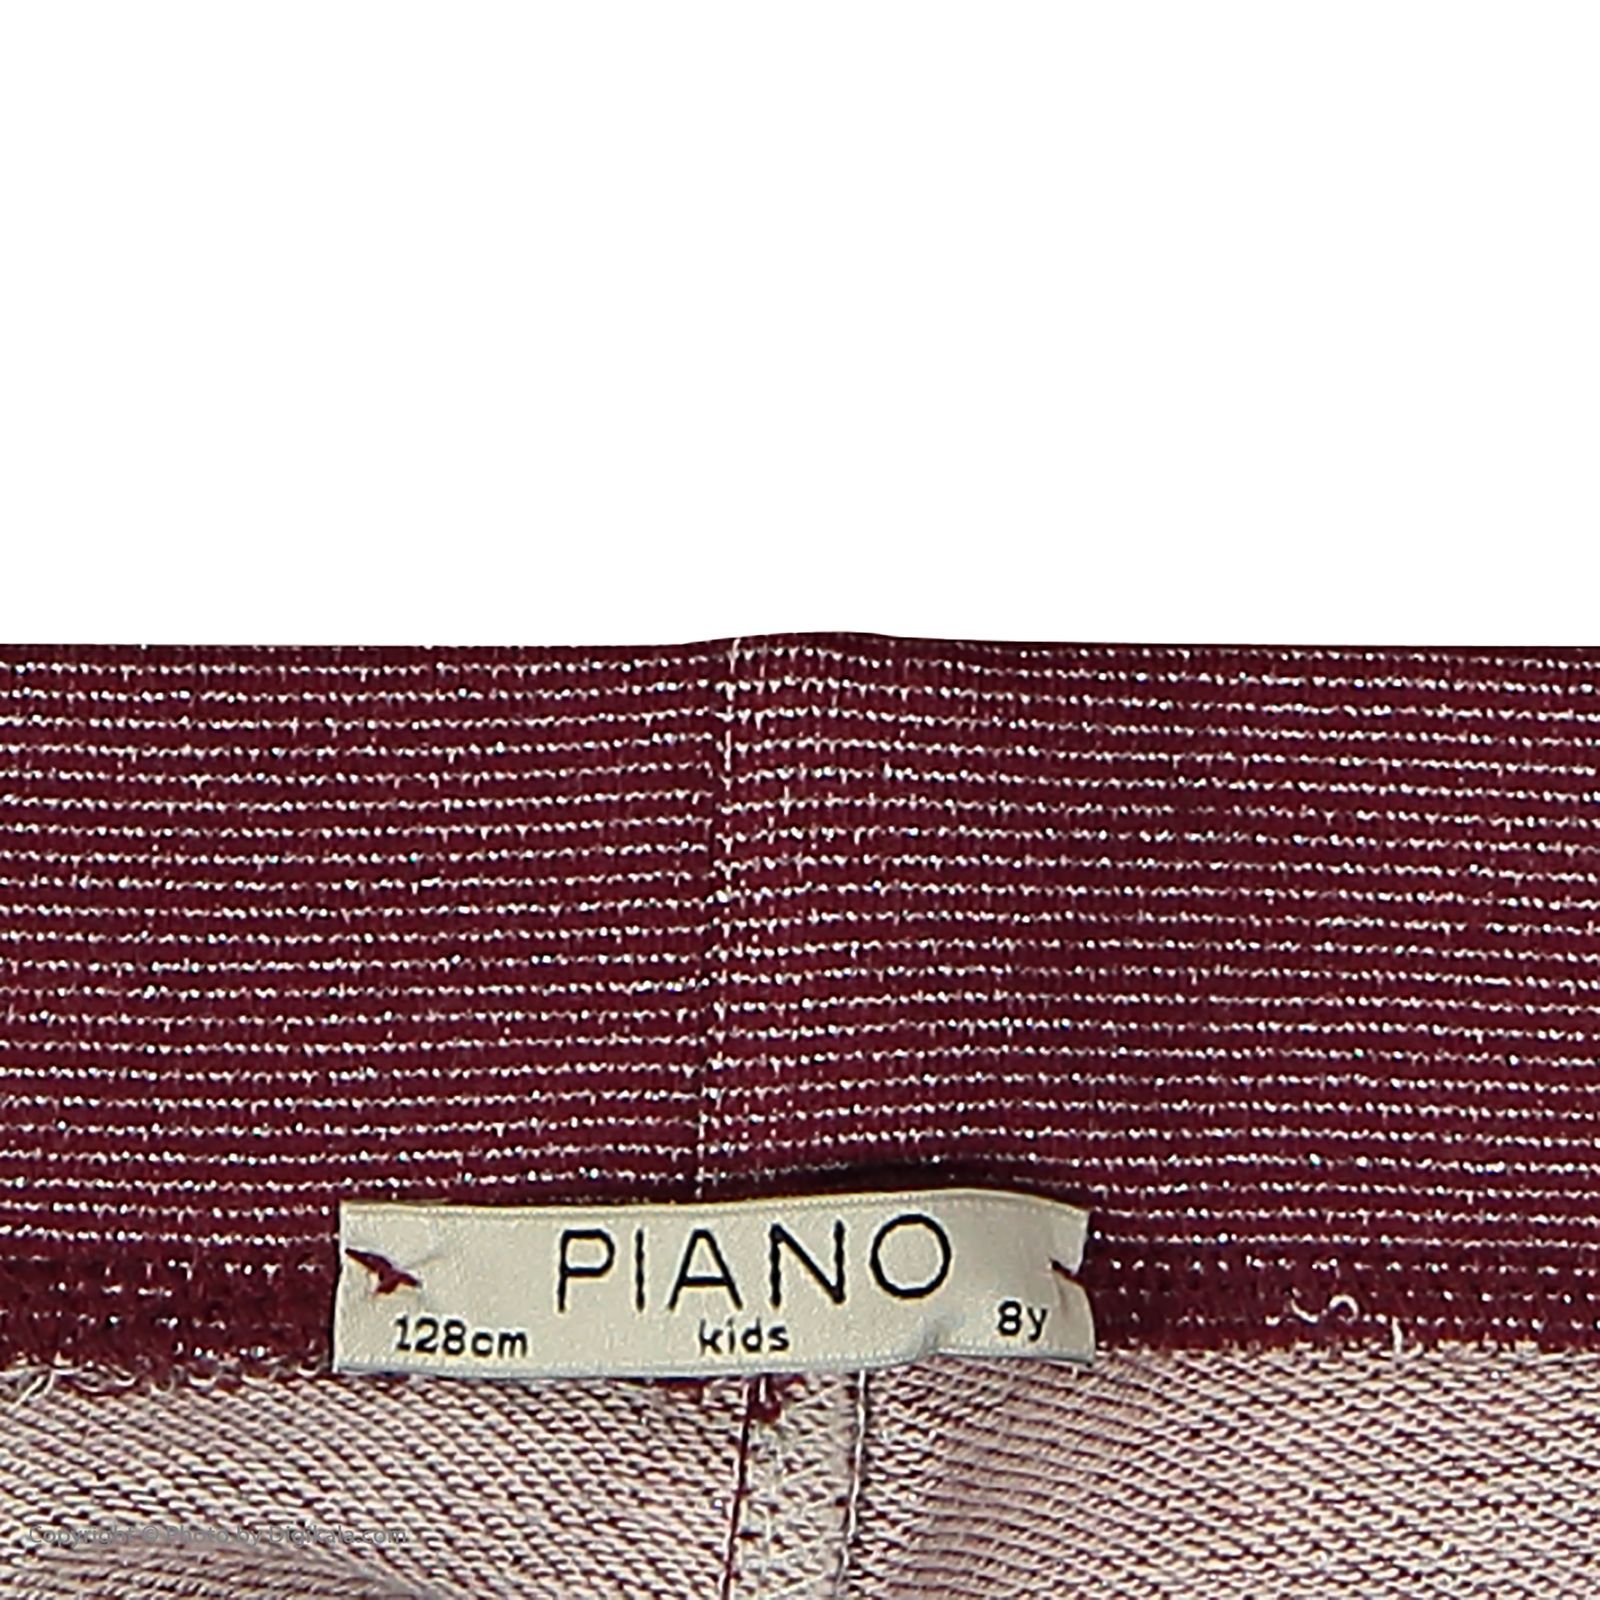 شلوار دخترانه پیانو مدل 1009009801025-70 -  - 4